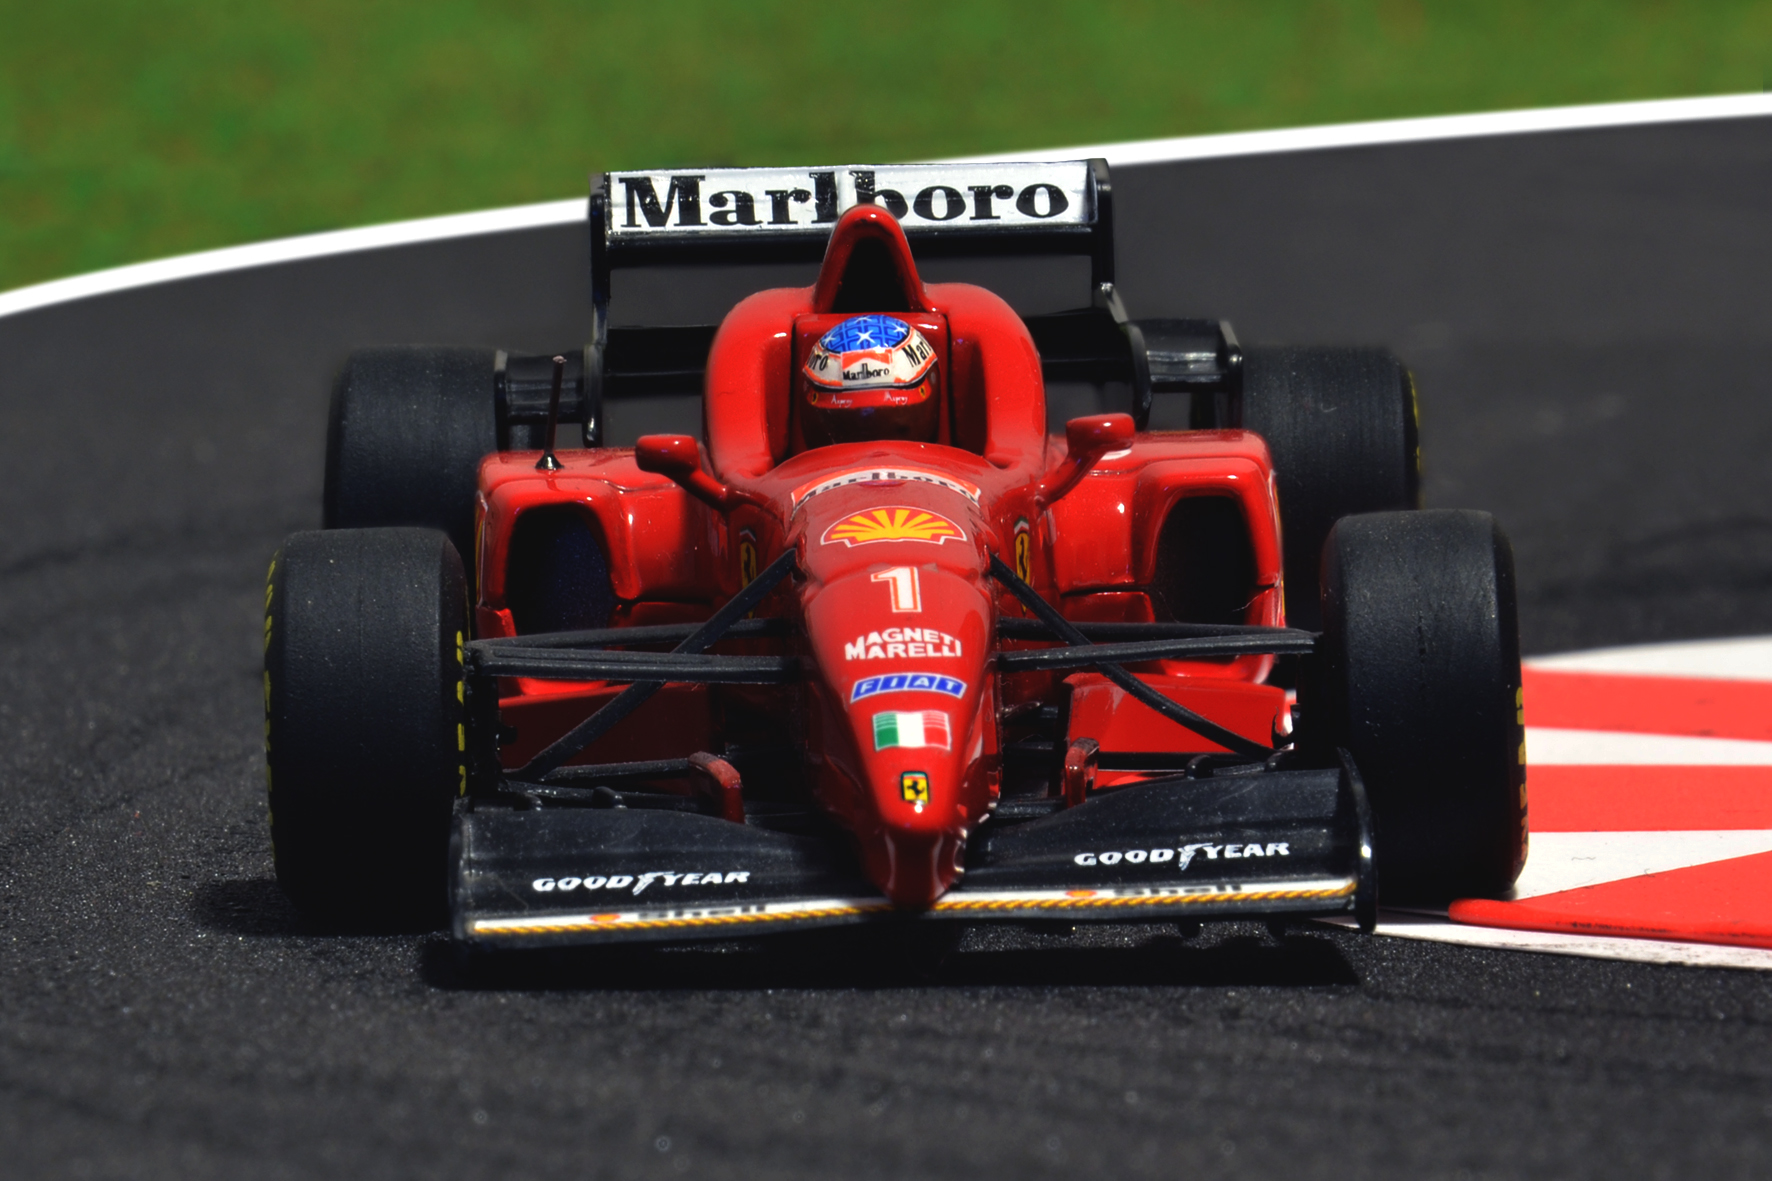 Ferrari F310 Michael Schumacher 1996 - Minichamps 1:43